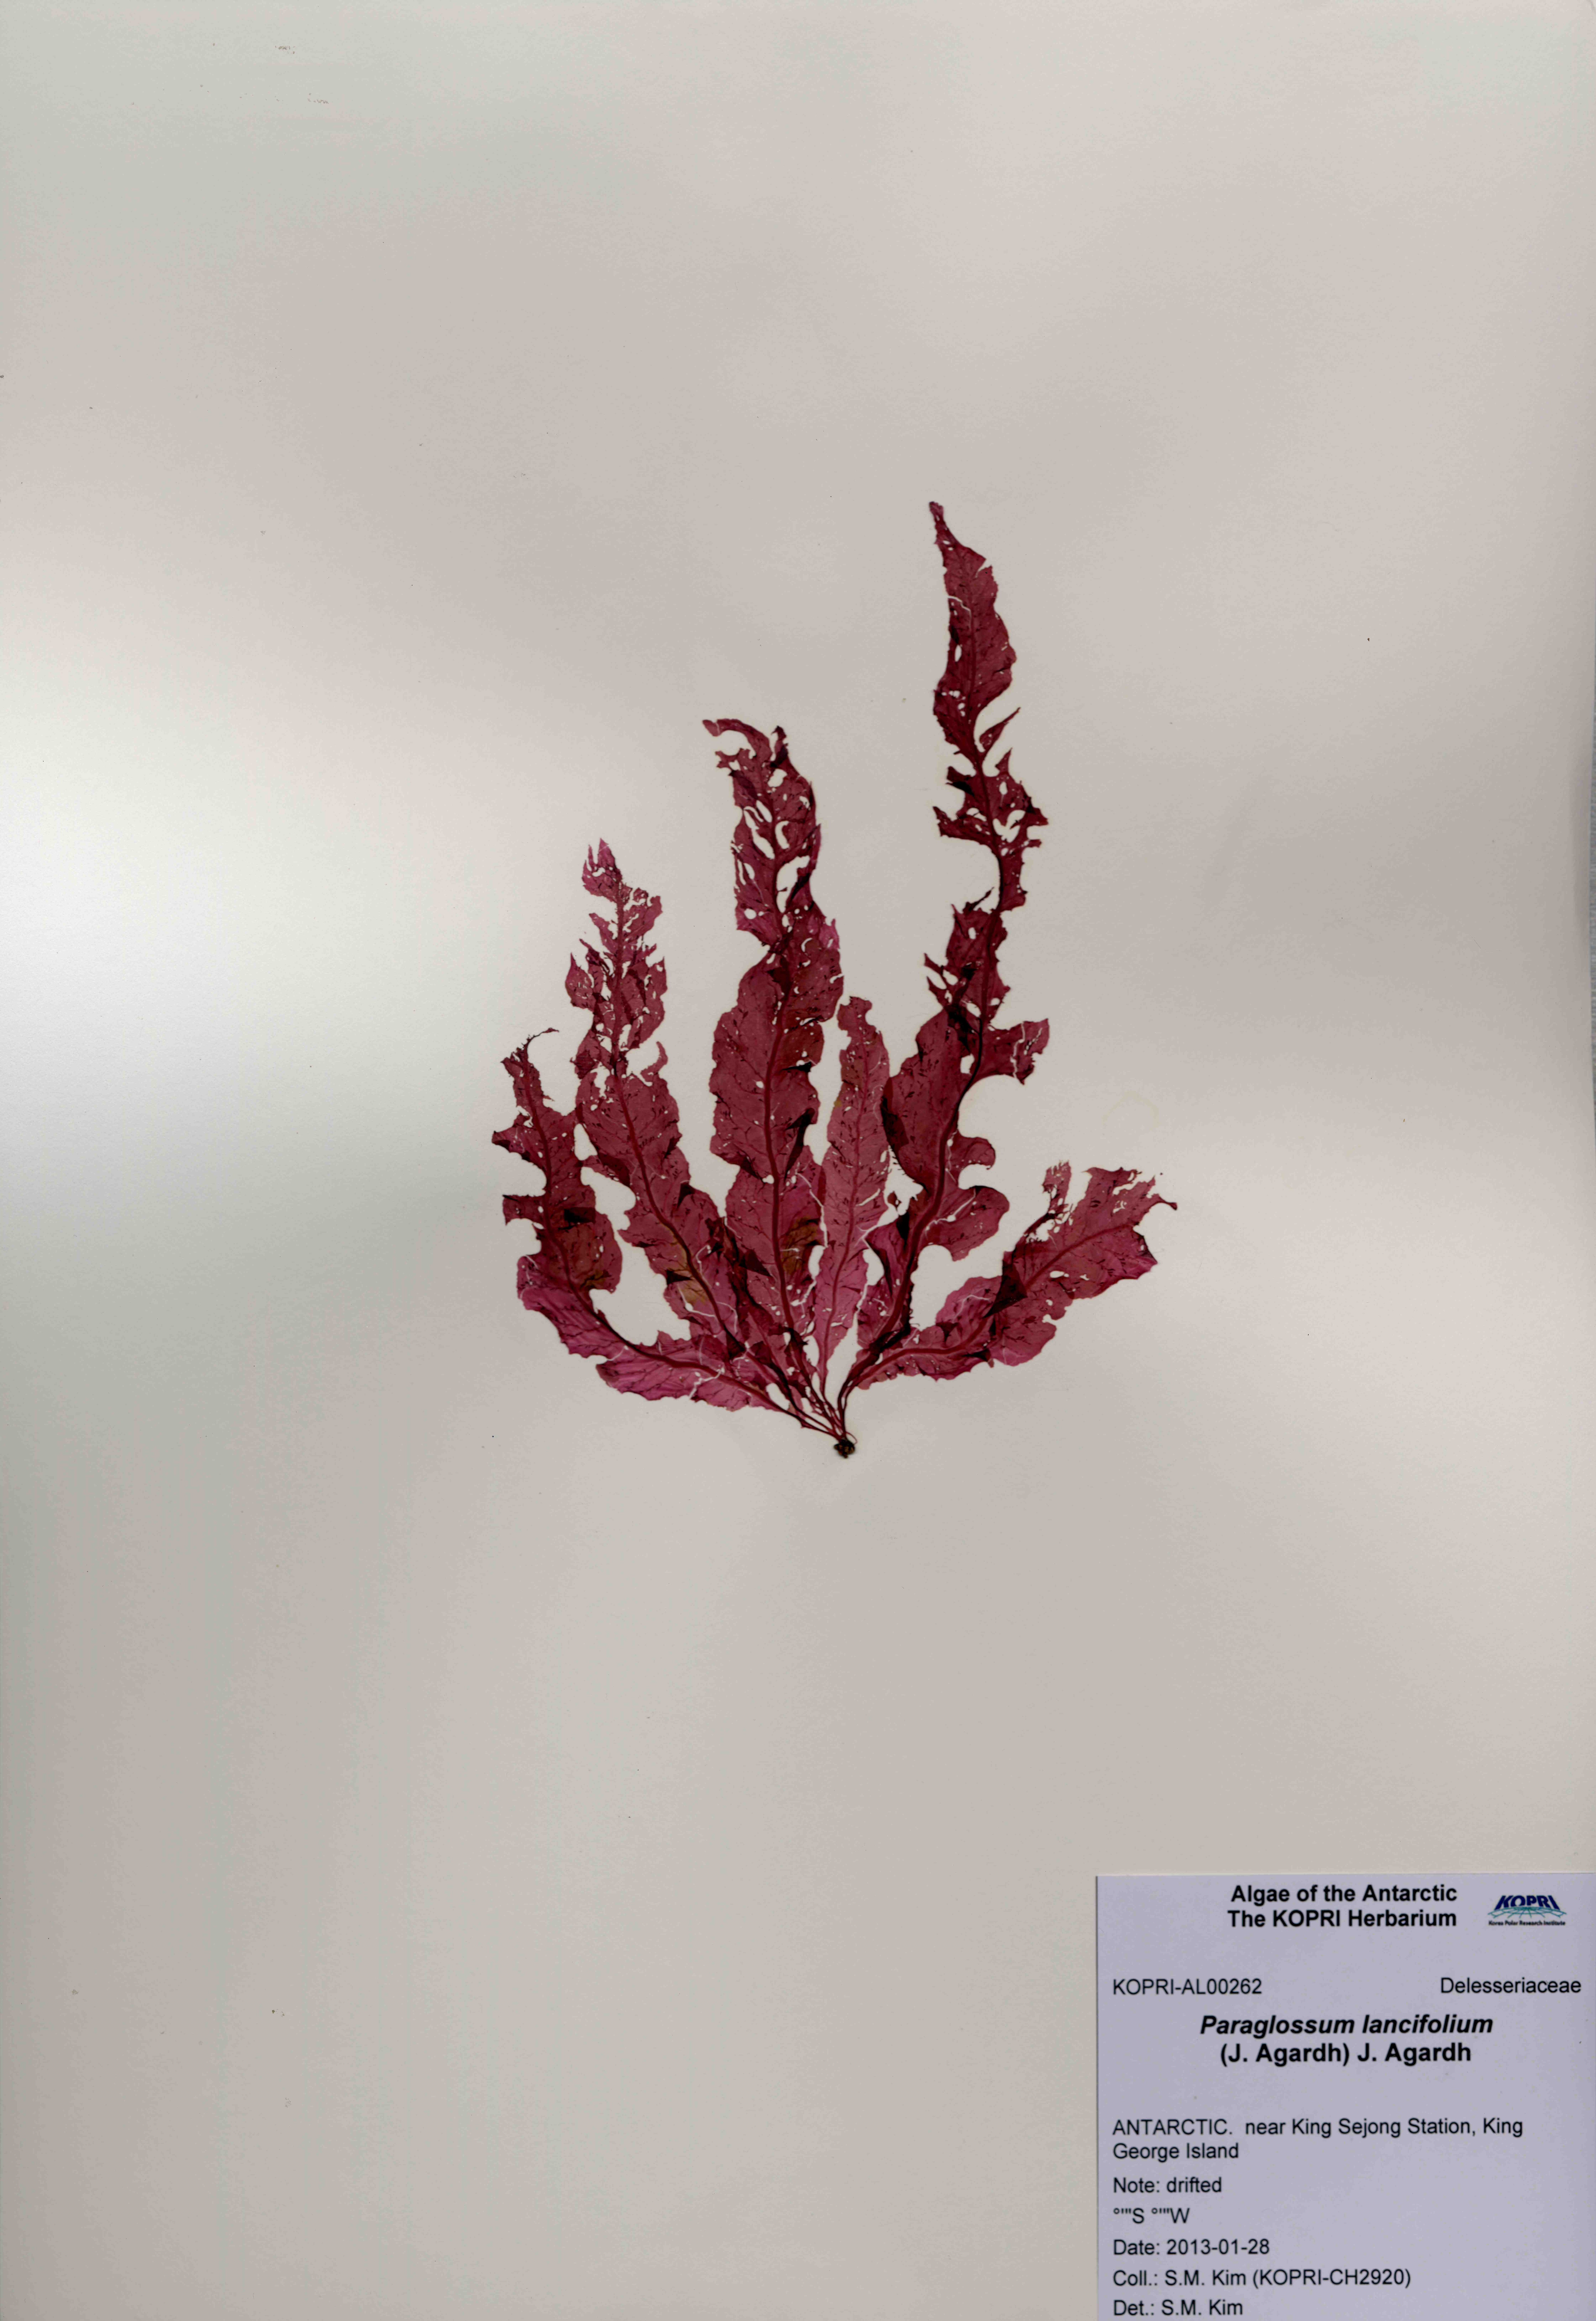 Paraglossum lancifolium(J. Agardh) J. Agardh